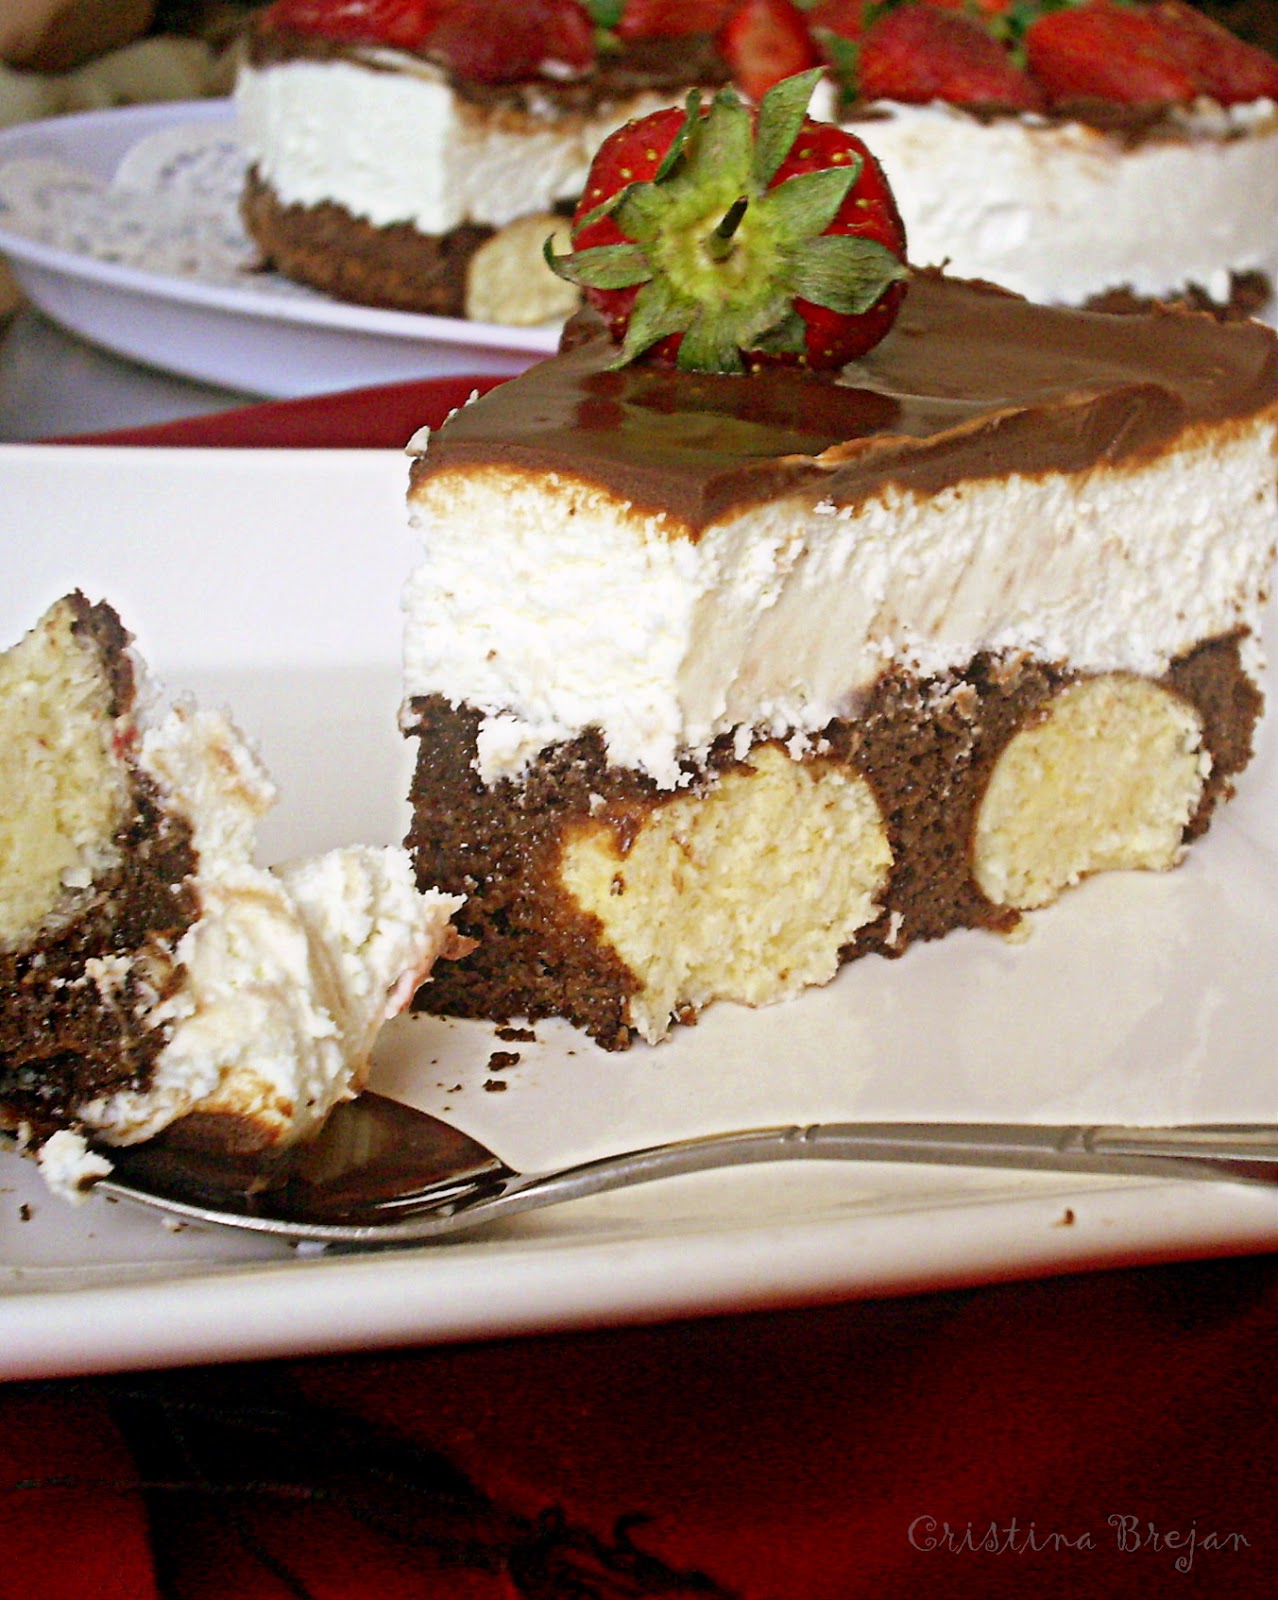 Cheesecake cu ciocolata si capsuni